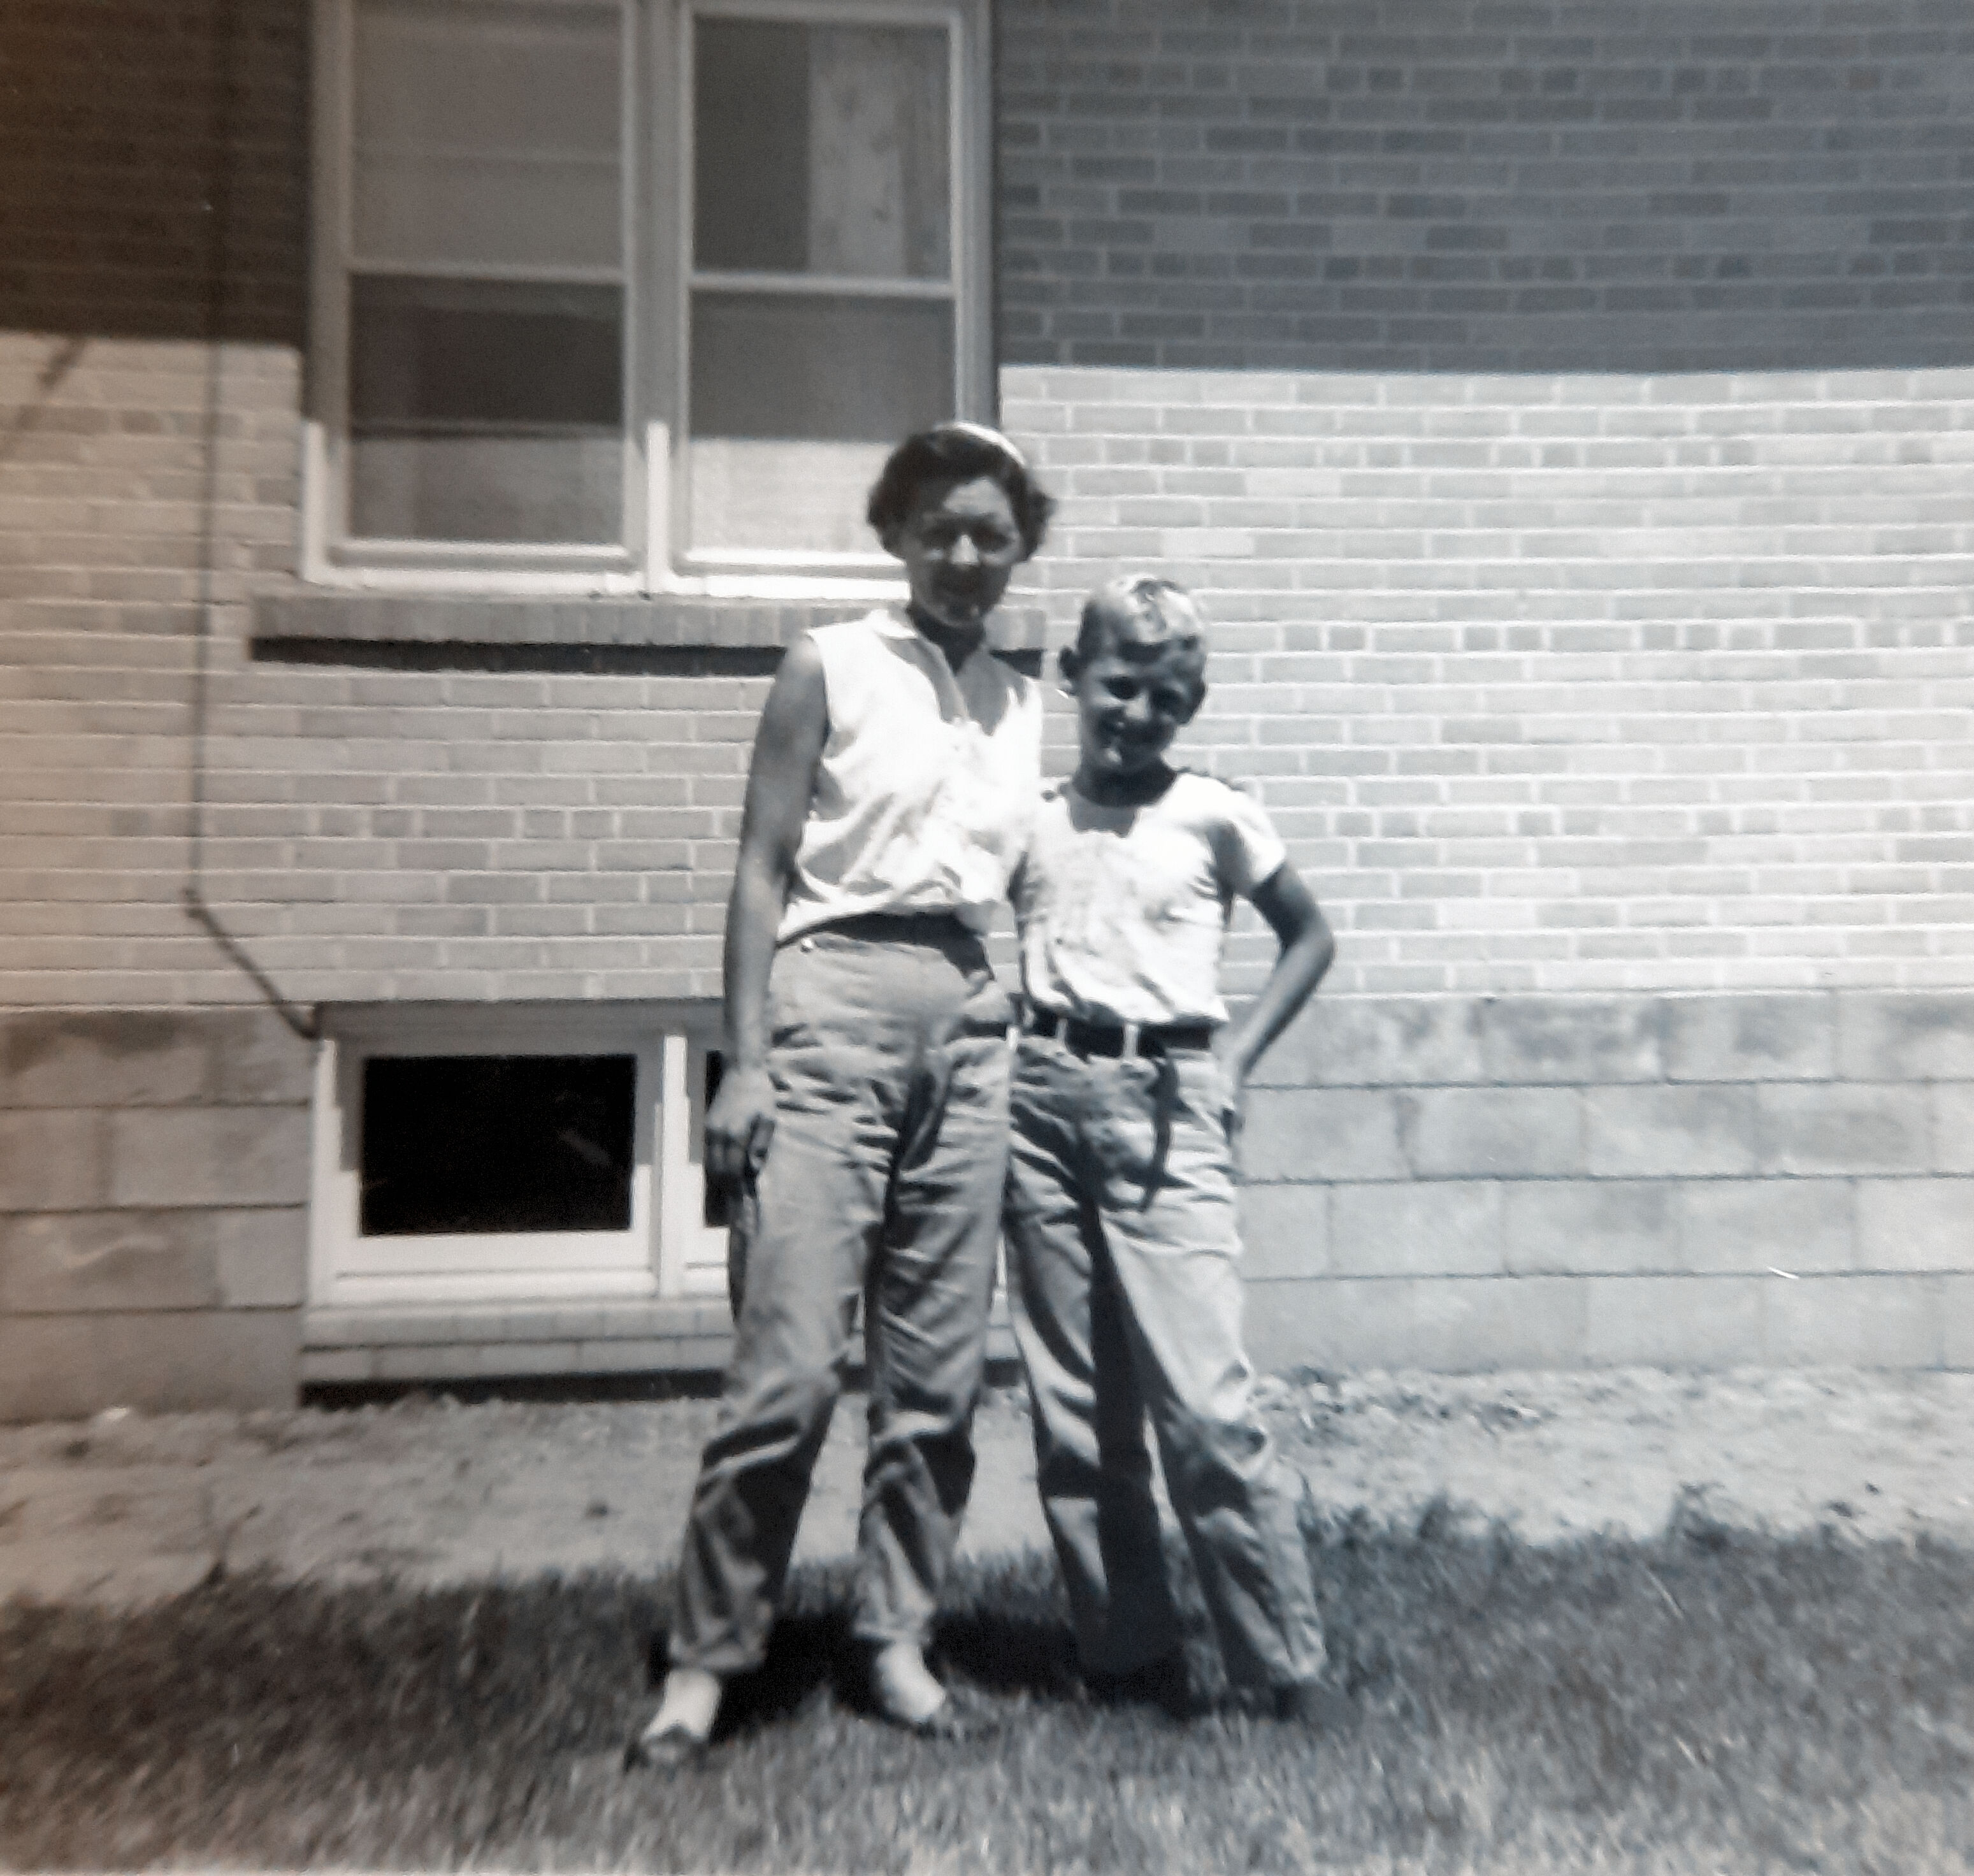 Mom & Ashton (11 years old)
July 1959